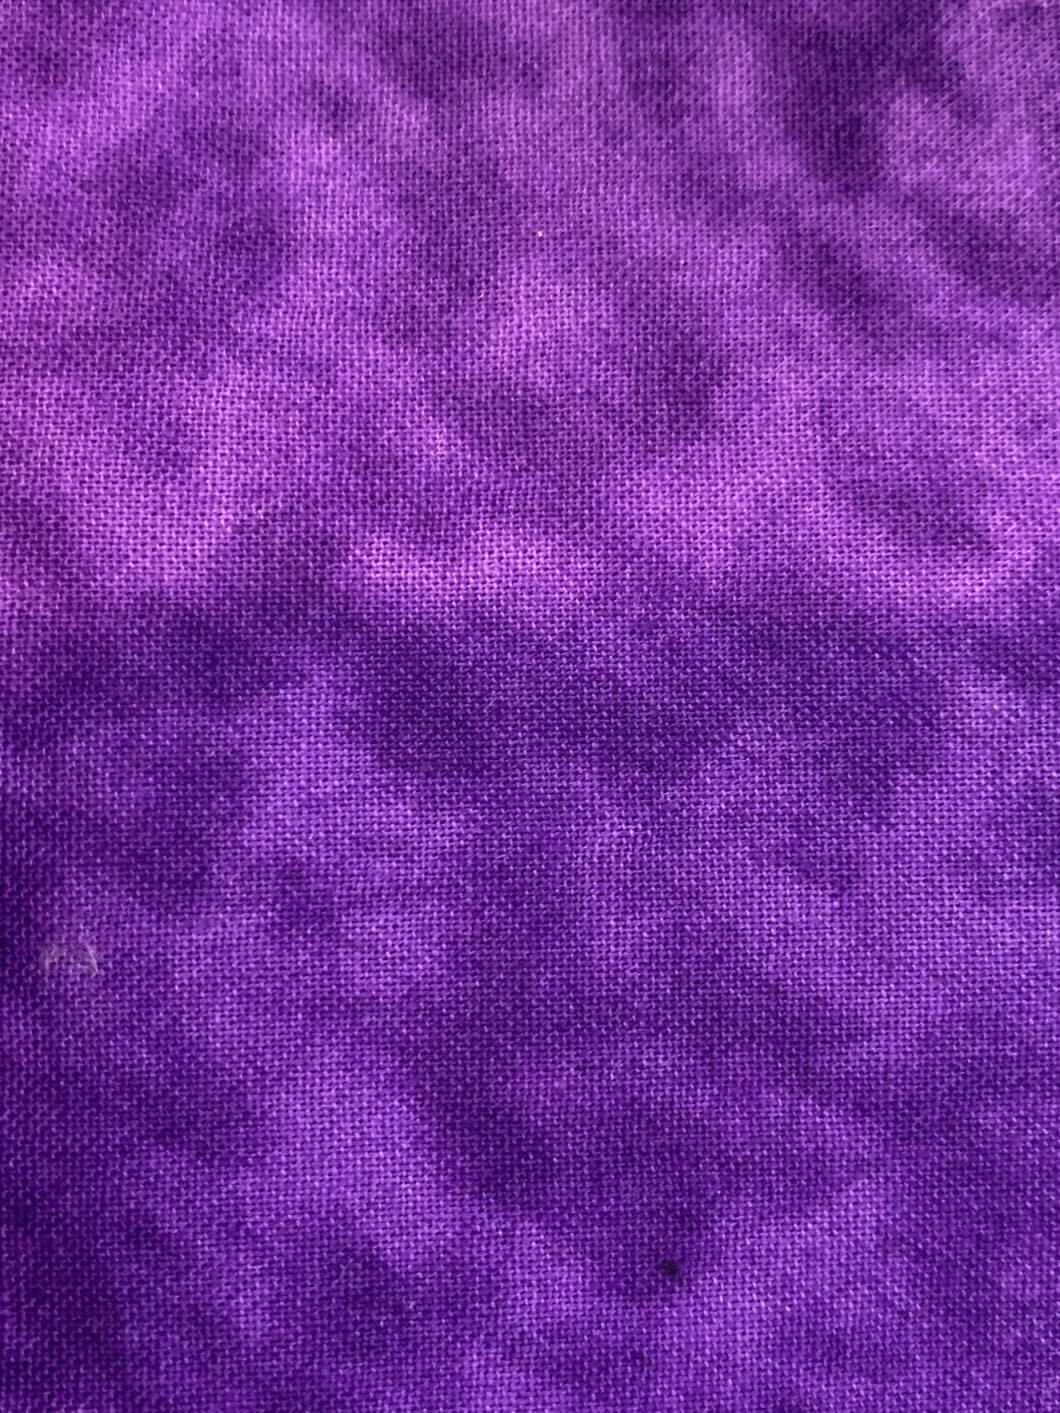 7 - 12 Purple